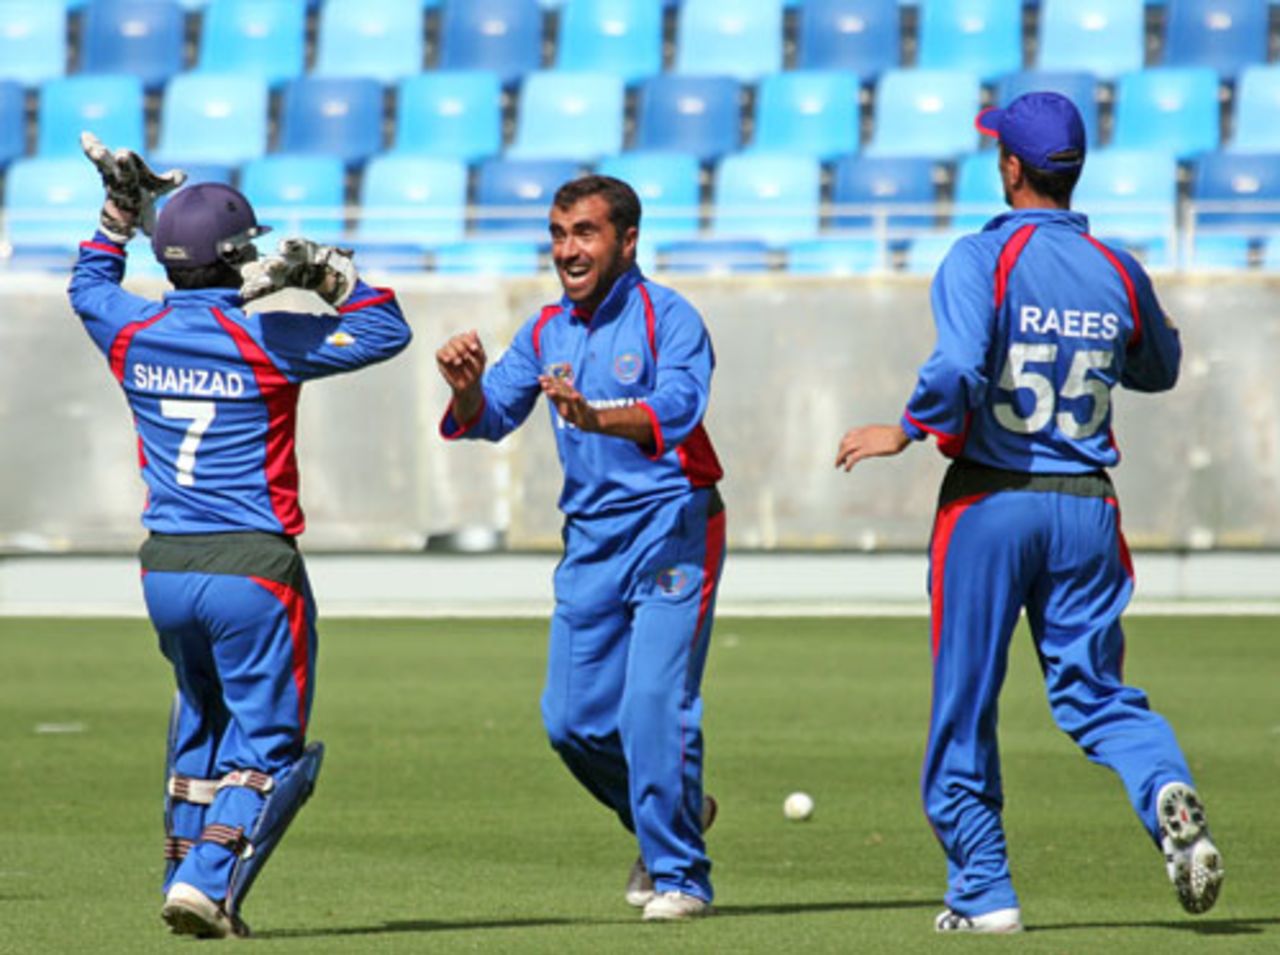 Karim Sadiq shows his delight as he celebrates a wicket, Afghanistan v Ireland, ICC World Twenty20 Qualifiers, February 9, 2010